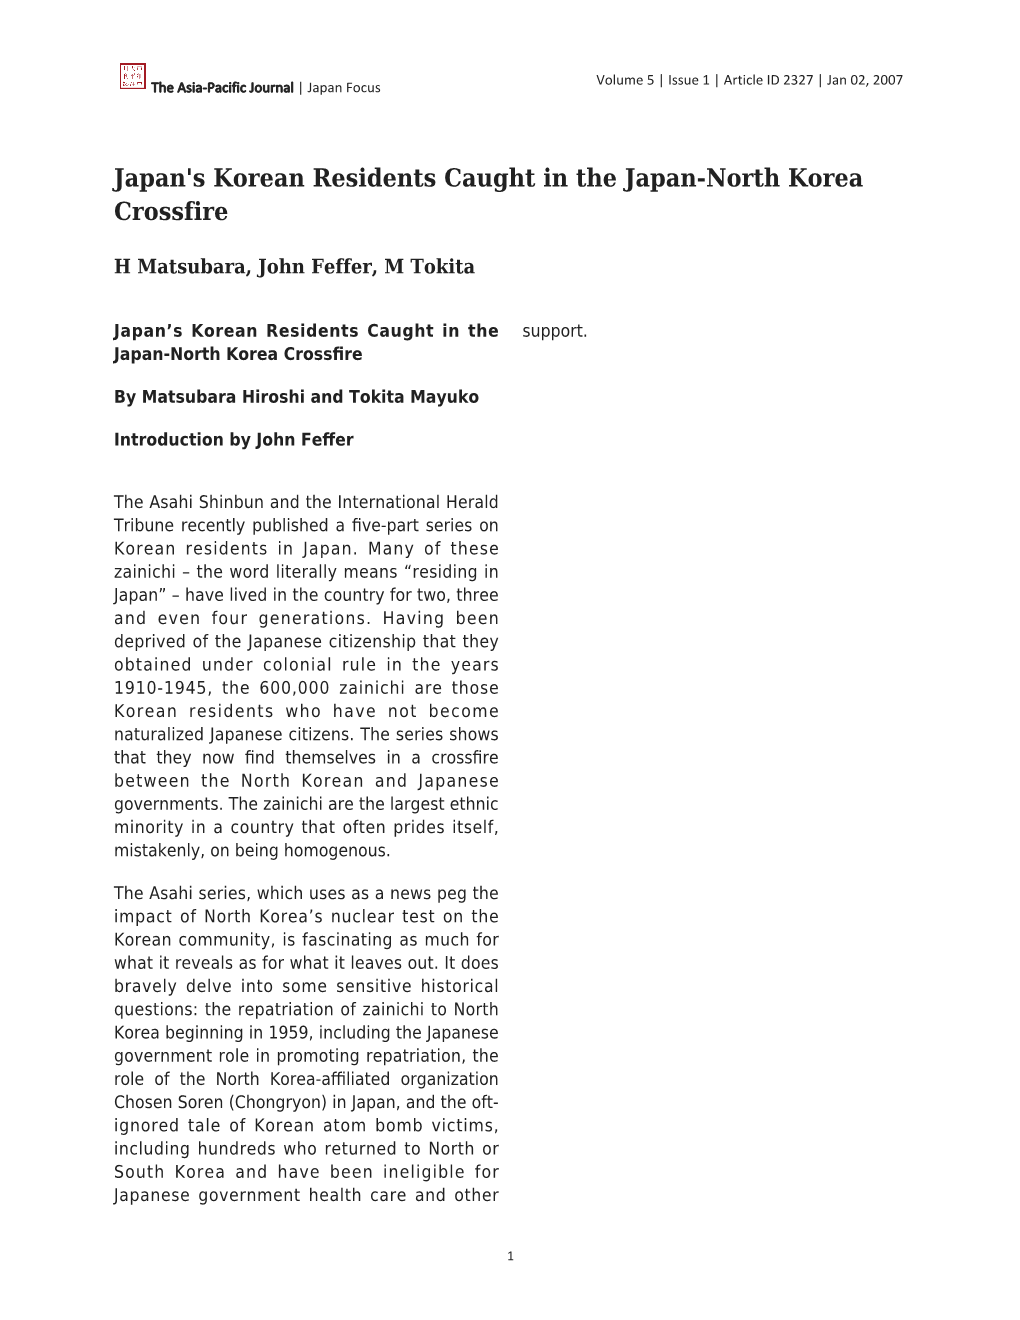 Japan's Korean Residents Caught in the Japan-North Korea Crossfire